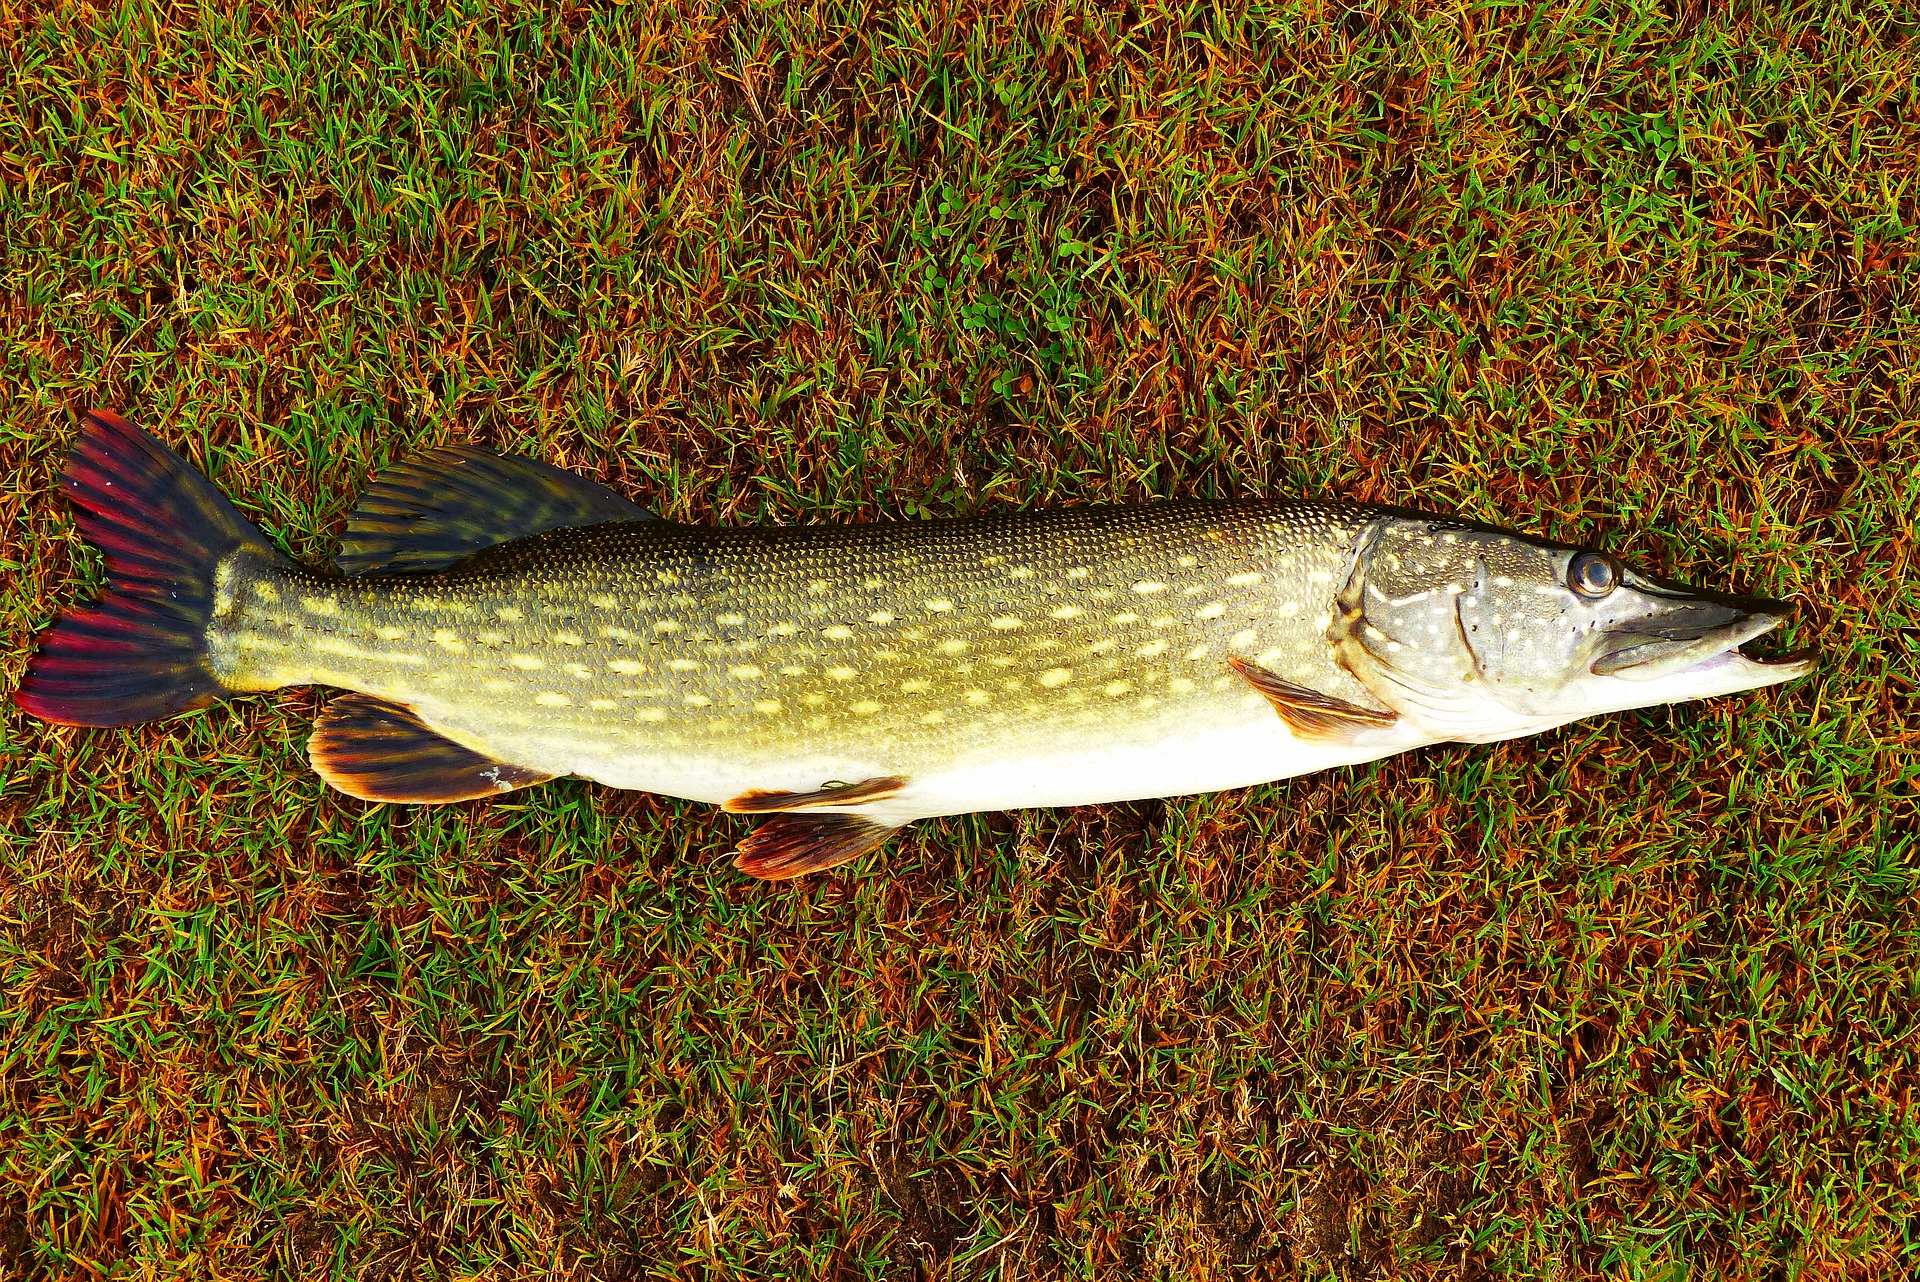 A fish lying on grass.